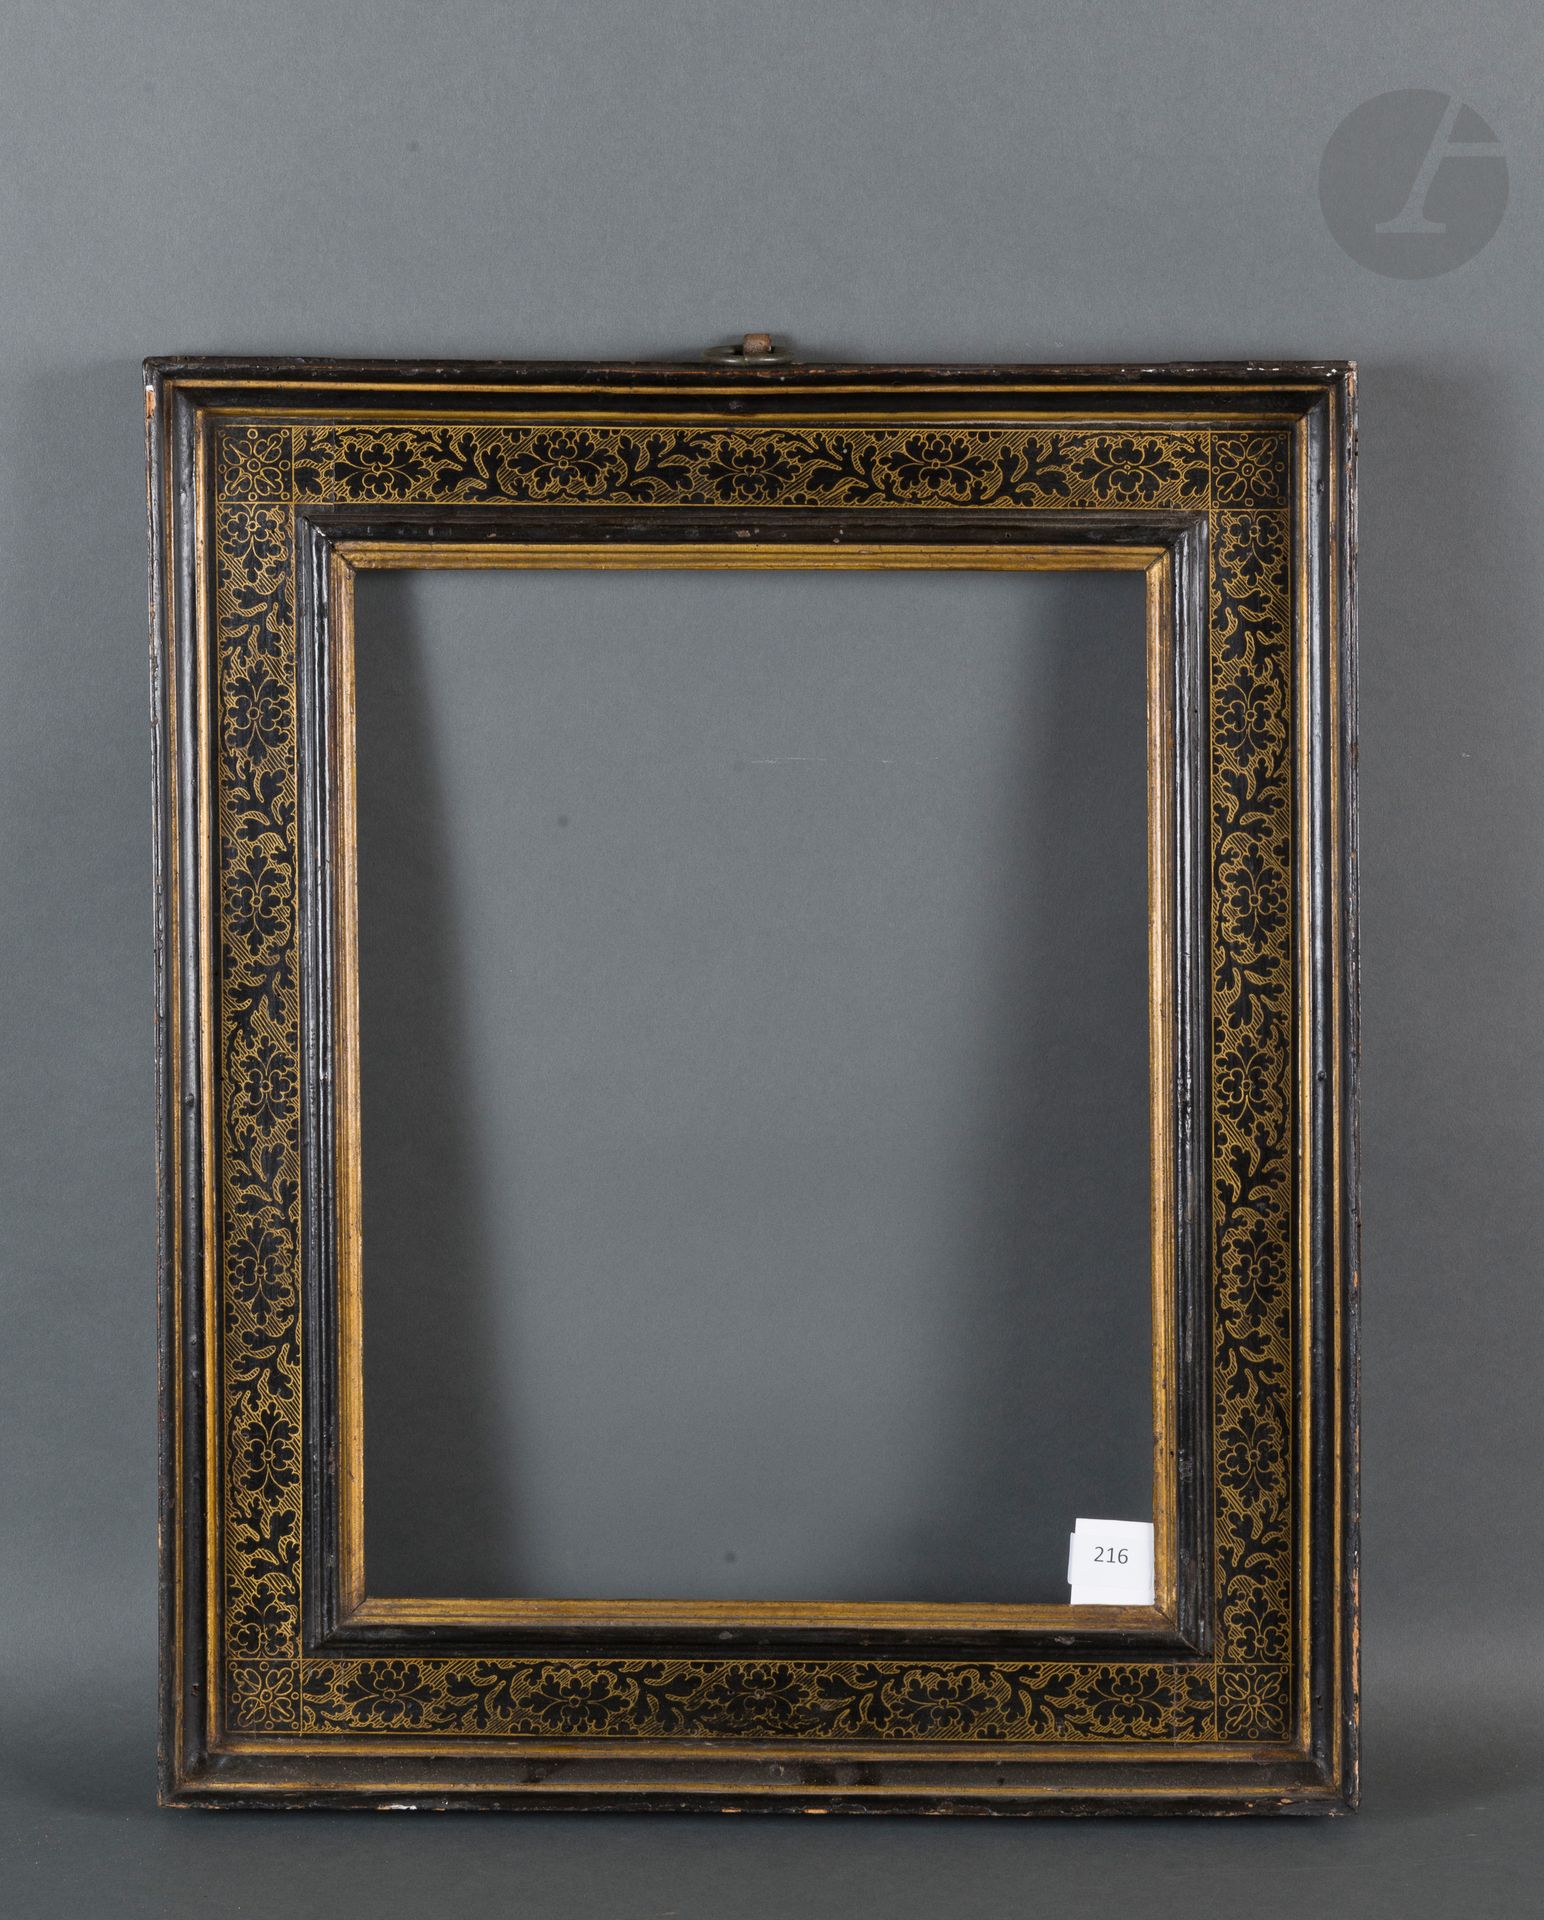 Null 17世纪托斯卡纳风格的模制和熏黑木质镀金装饰的卡塞塔框架。20世纪。
33 x 43,2厘米 - 外形：8,5厘米（8P
）。